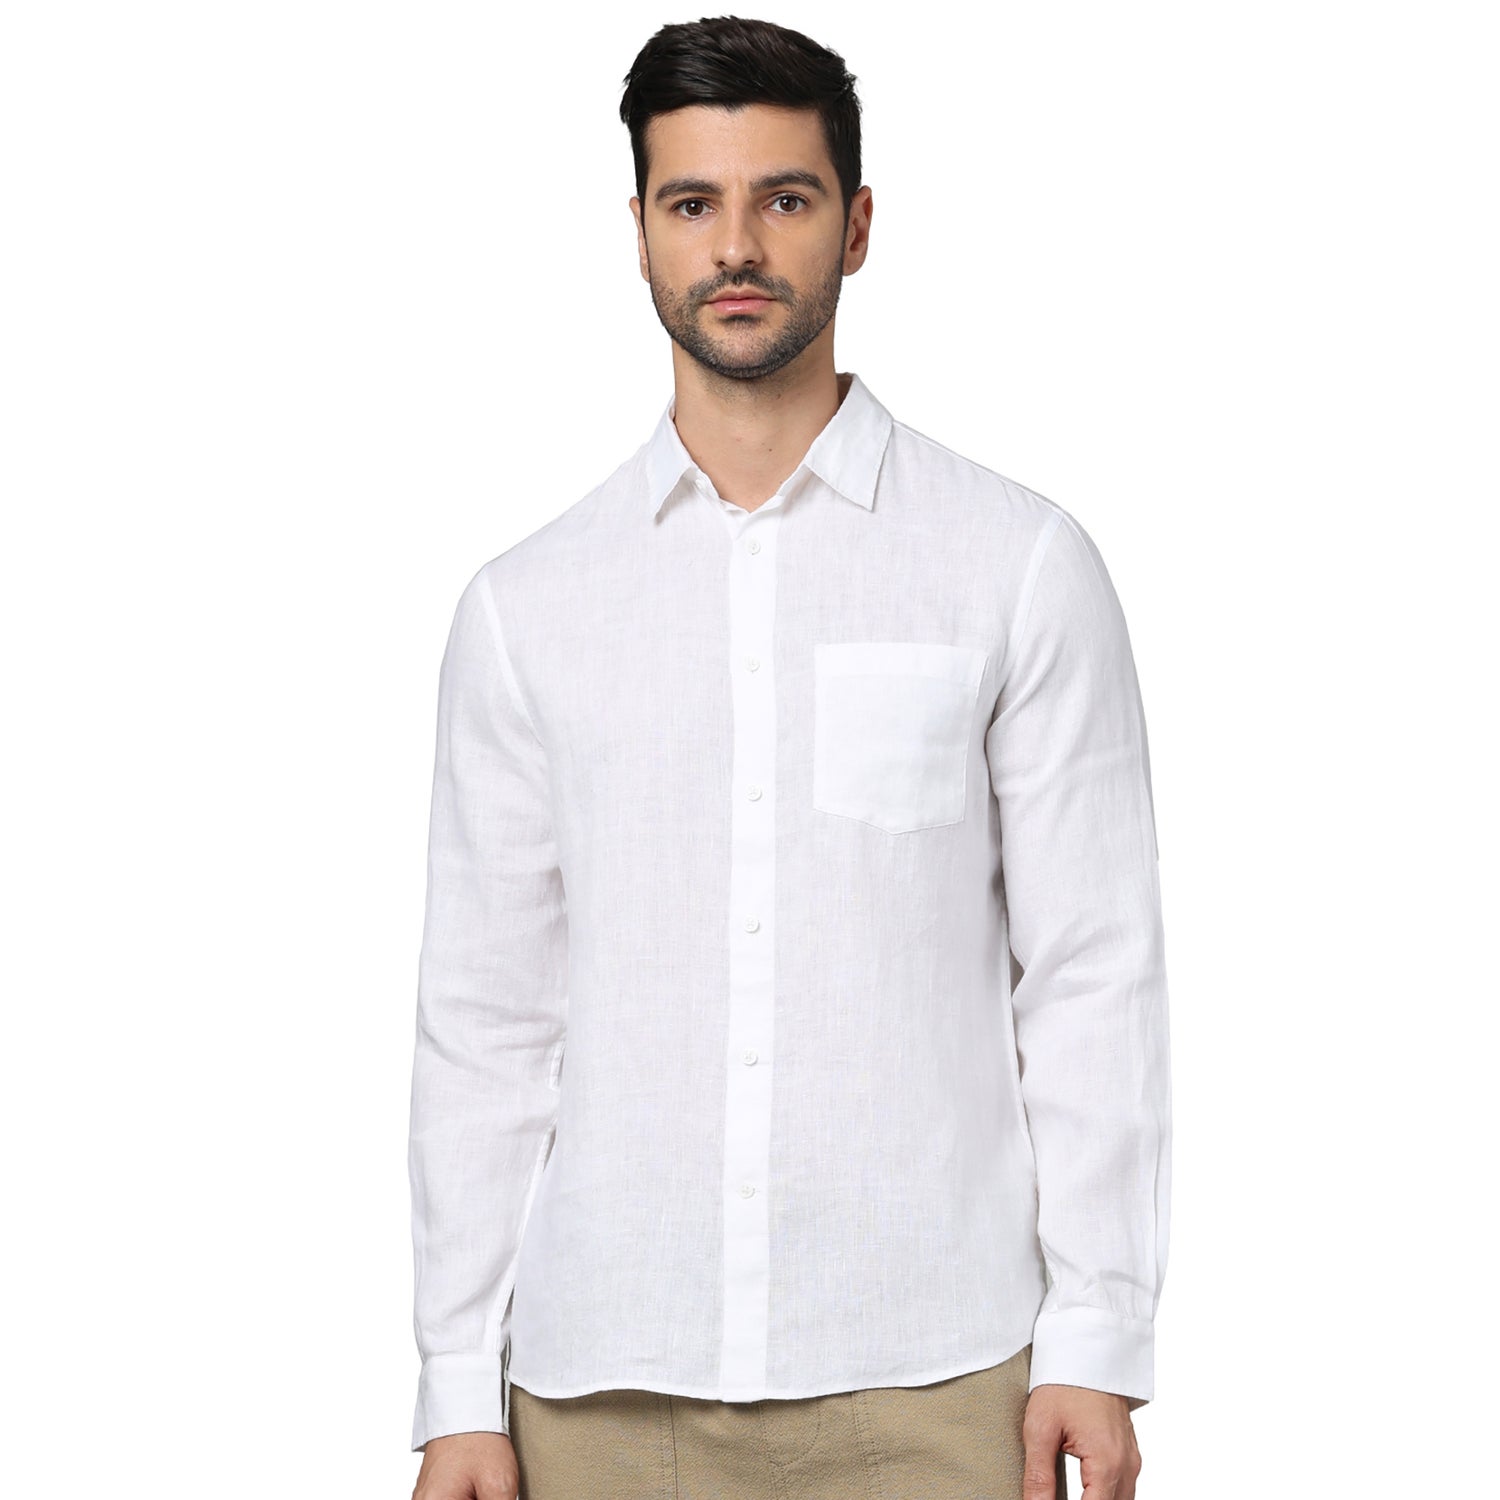 Men's White Spread Collar Solid Regular Fit Linen Shirts (GATALINO)